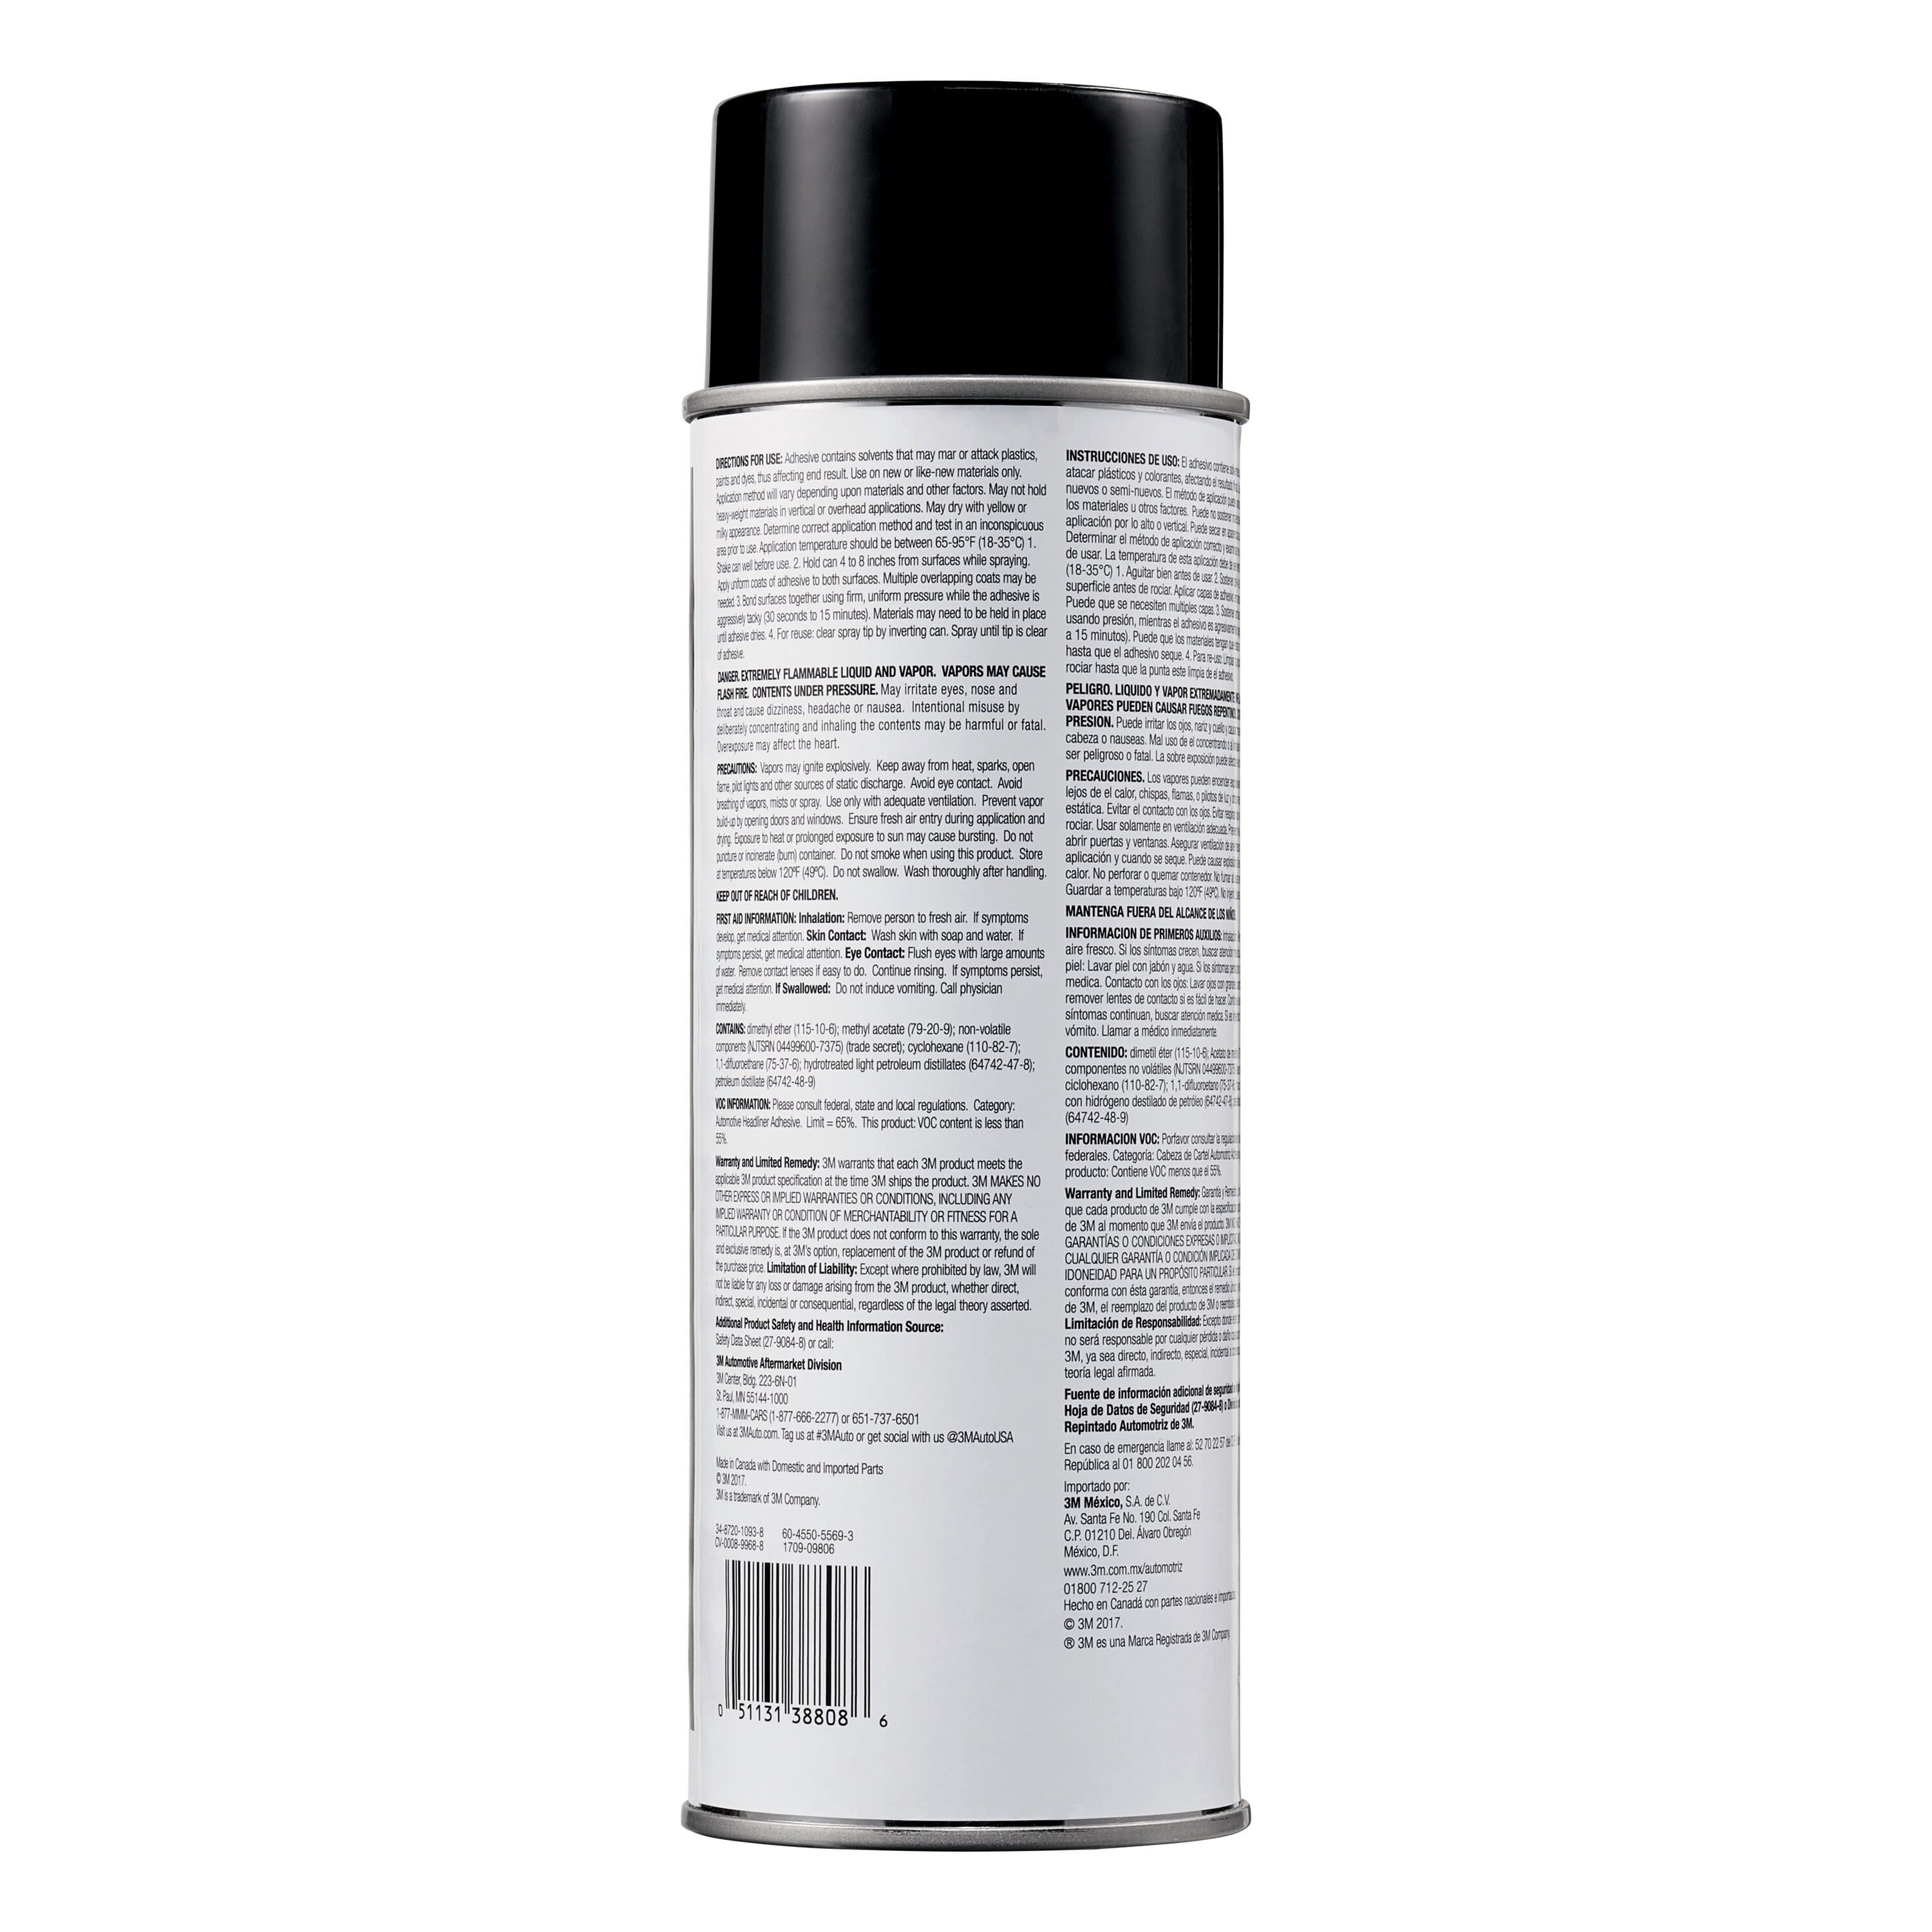 V&S #1081 Headliner Spray Adhesive 12oz can